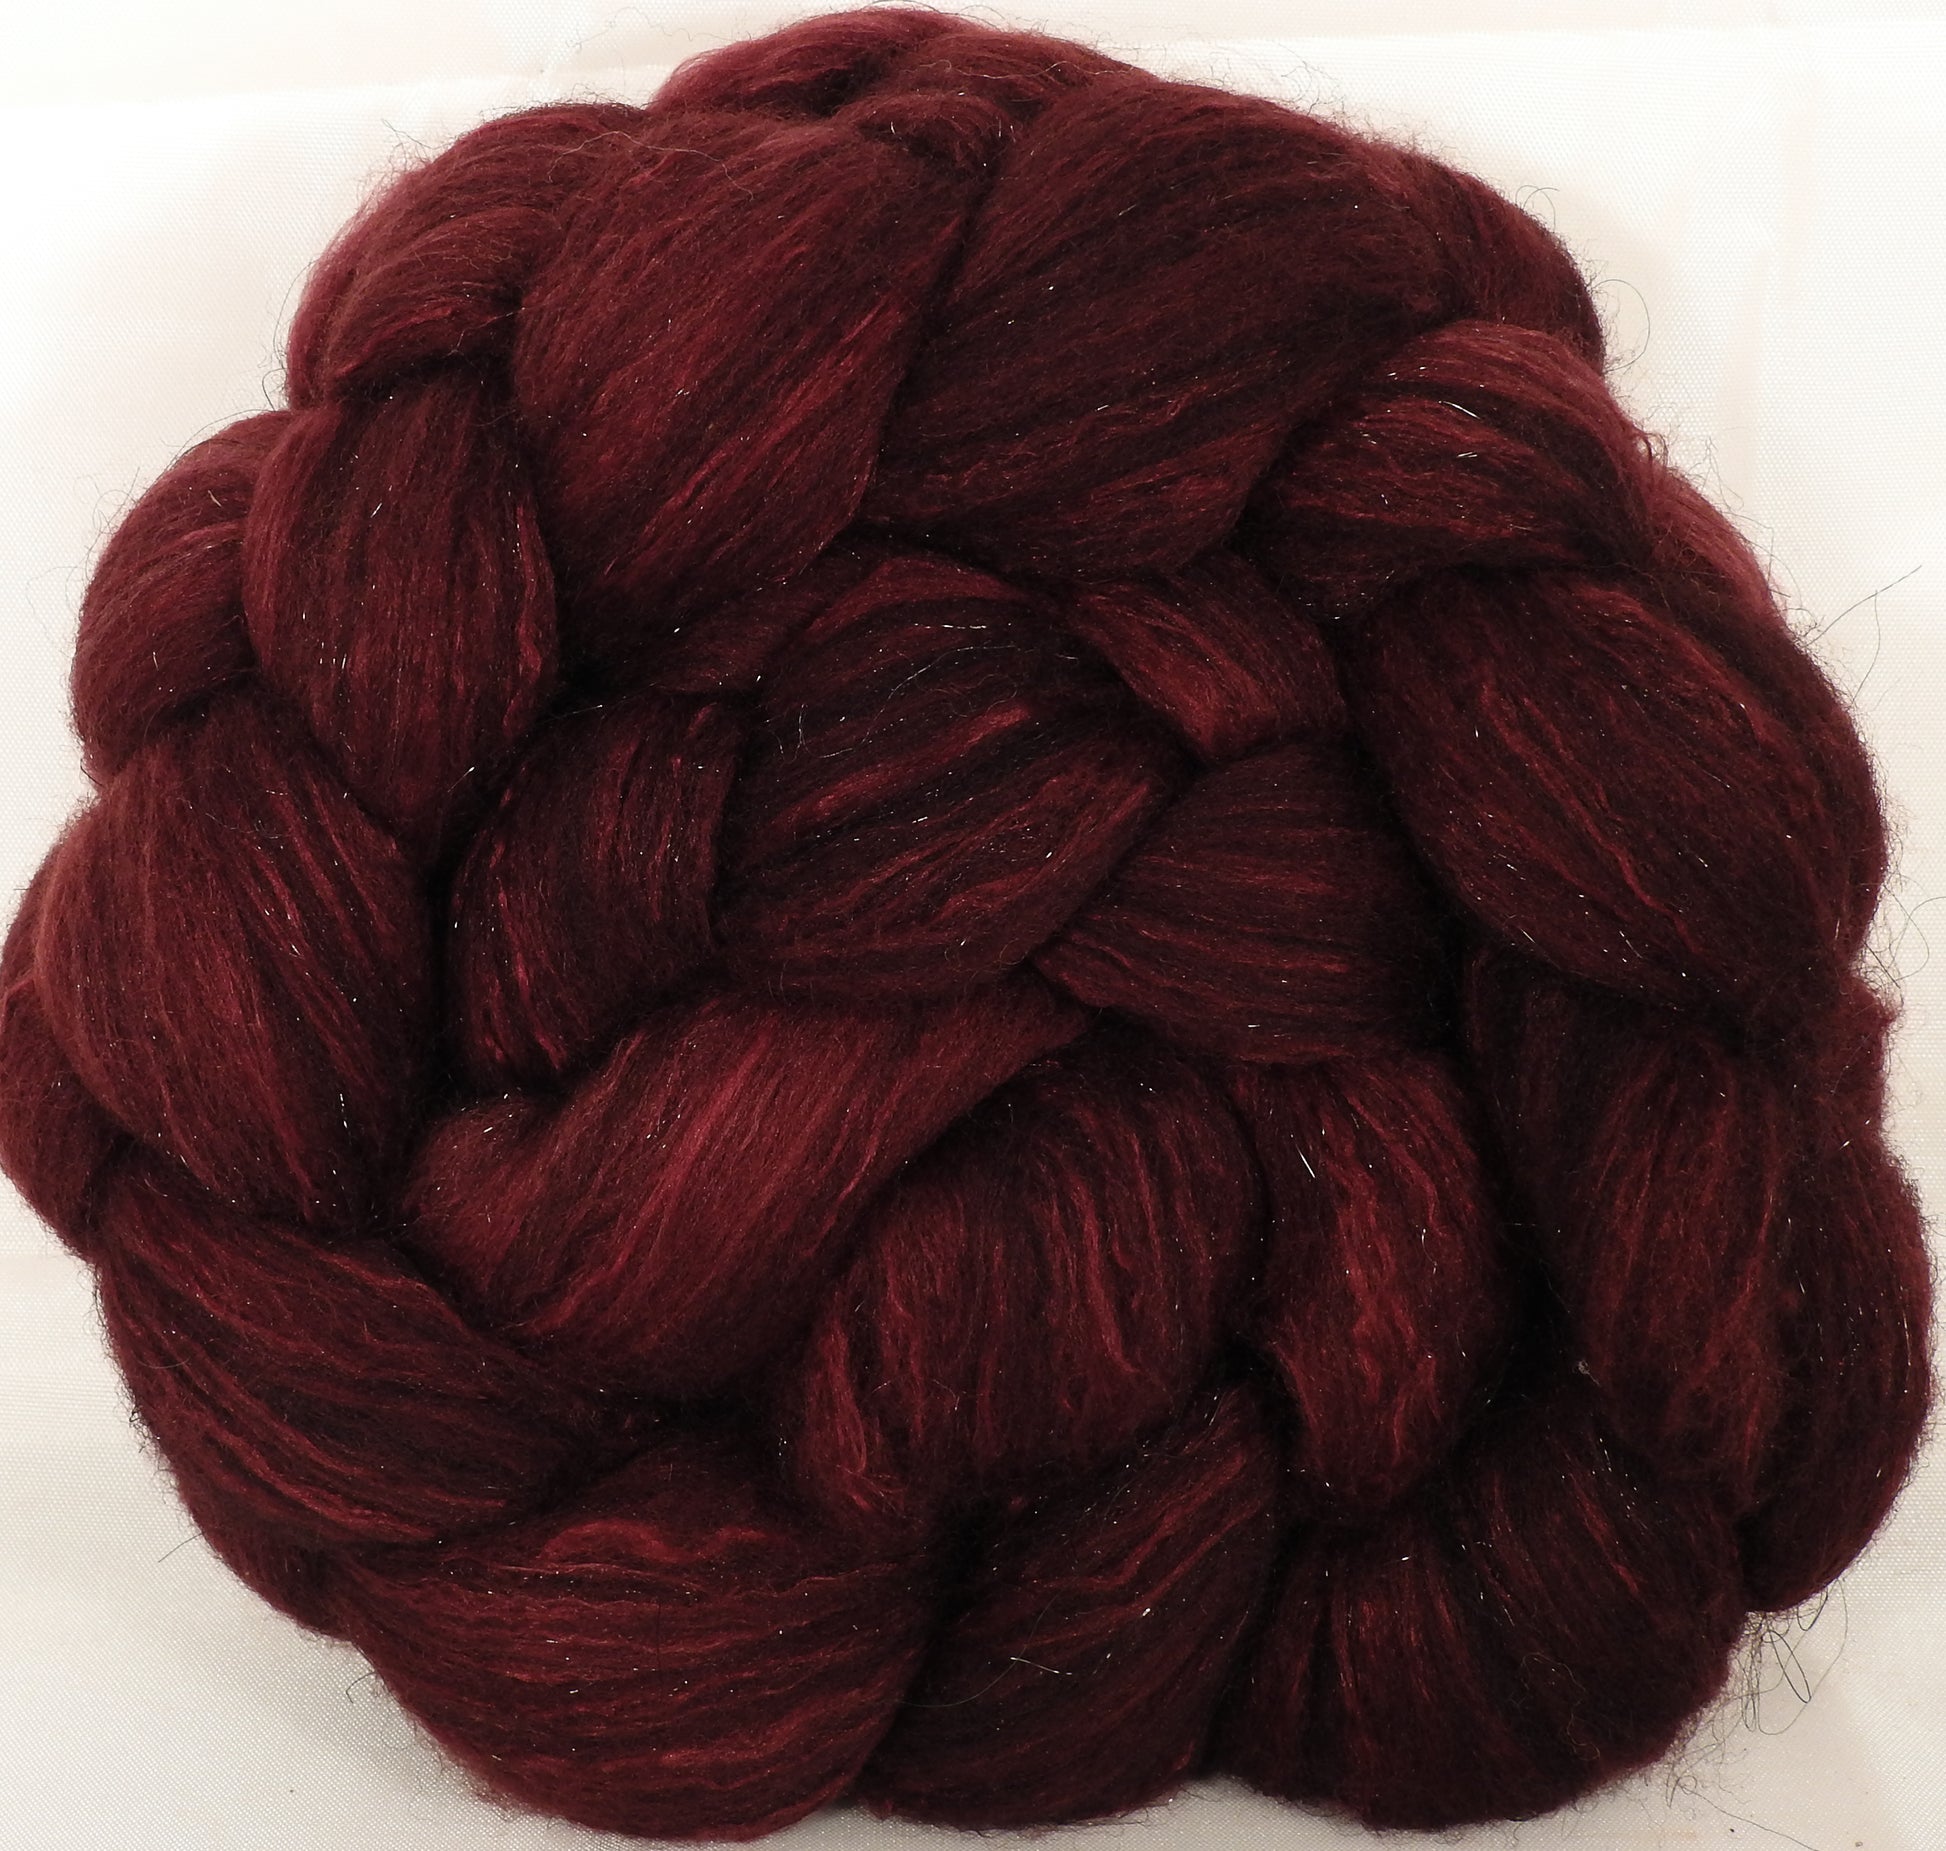 Batt in a Braid #7 -Pomegranate-(5.3 oz.)Polwarth/ Manx / Mulberry silk/ Firestar (30/30/30/10) - Inglenook Fibers